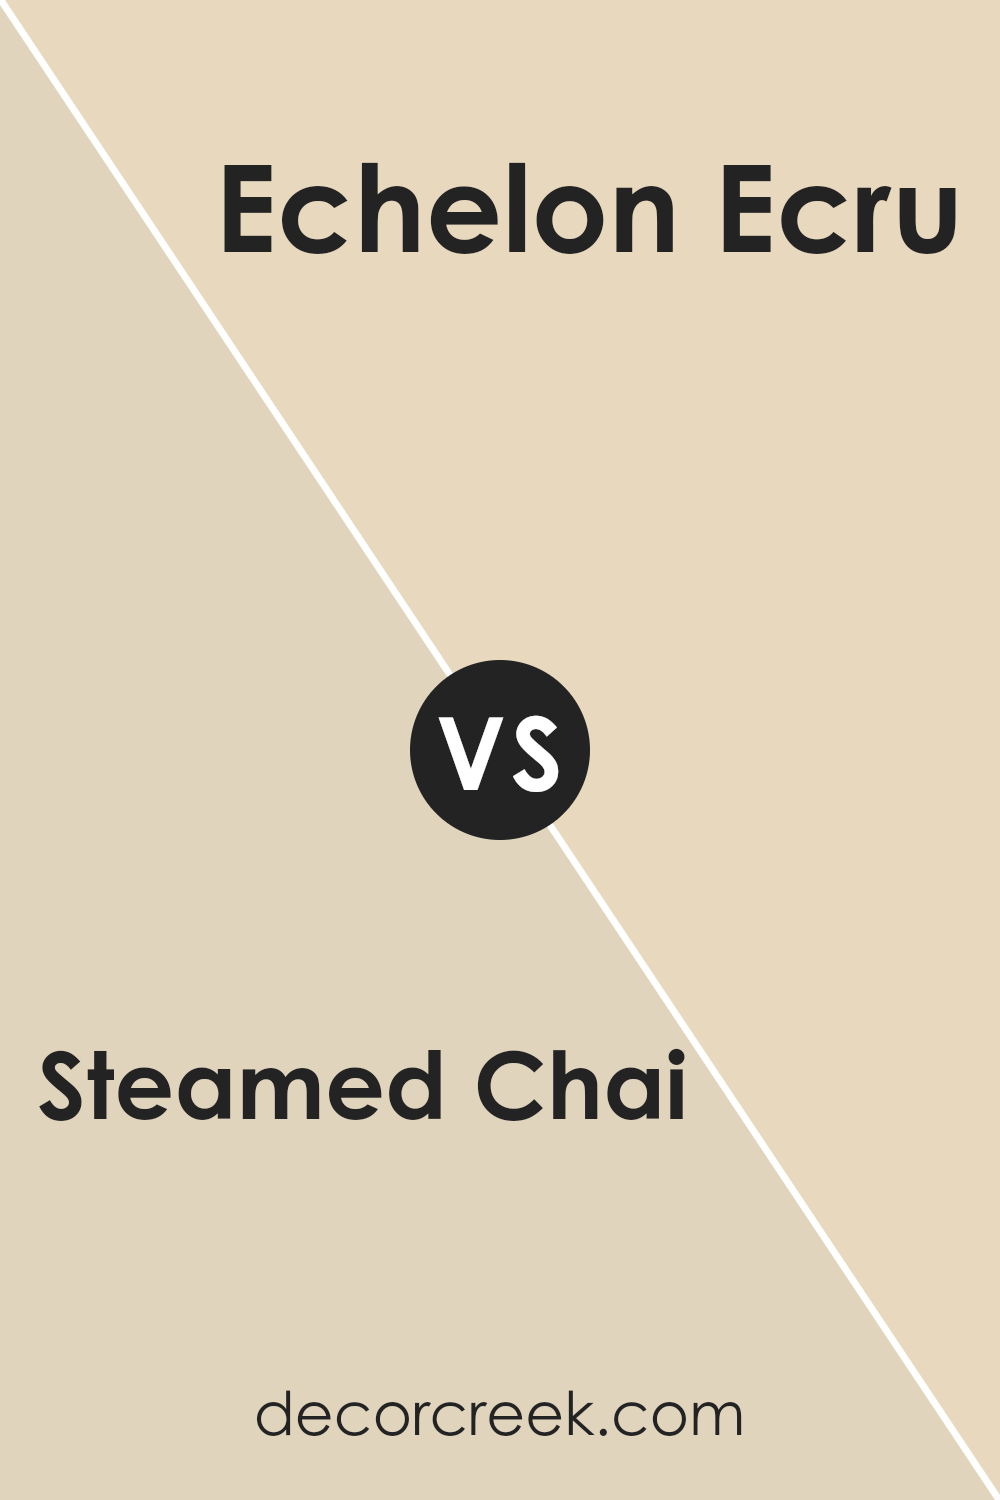 steamed_chai_sw_9509_vs_echelon_ecru_sw_7574